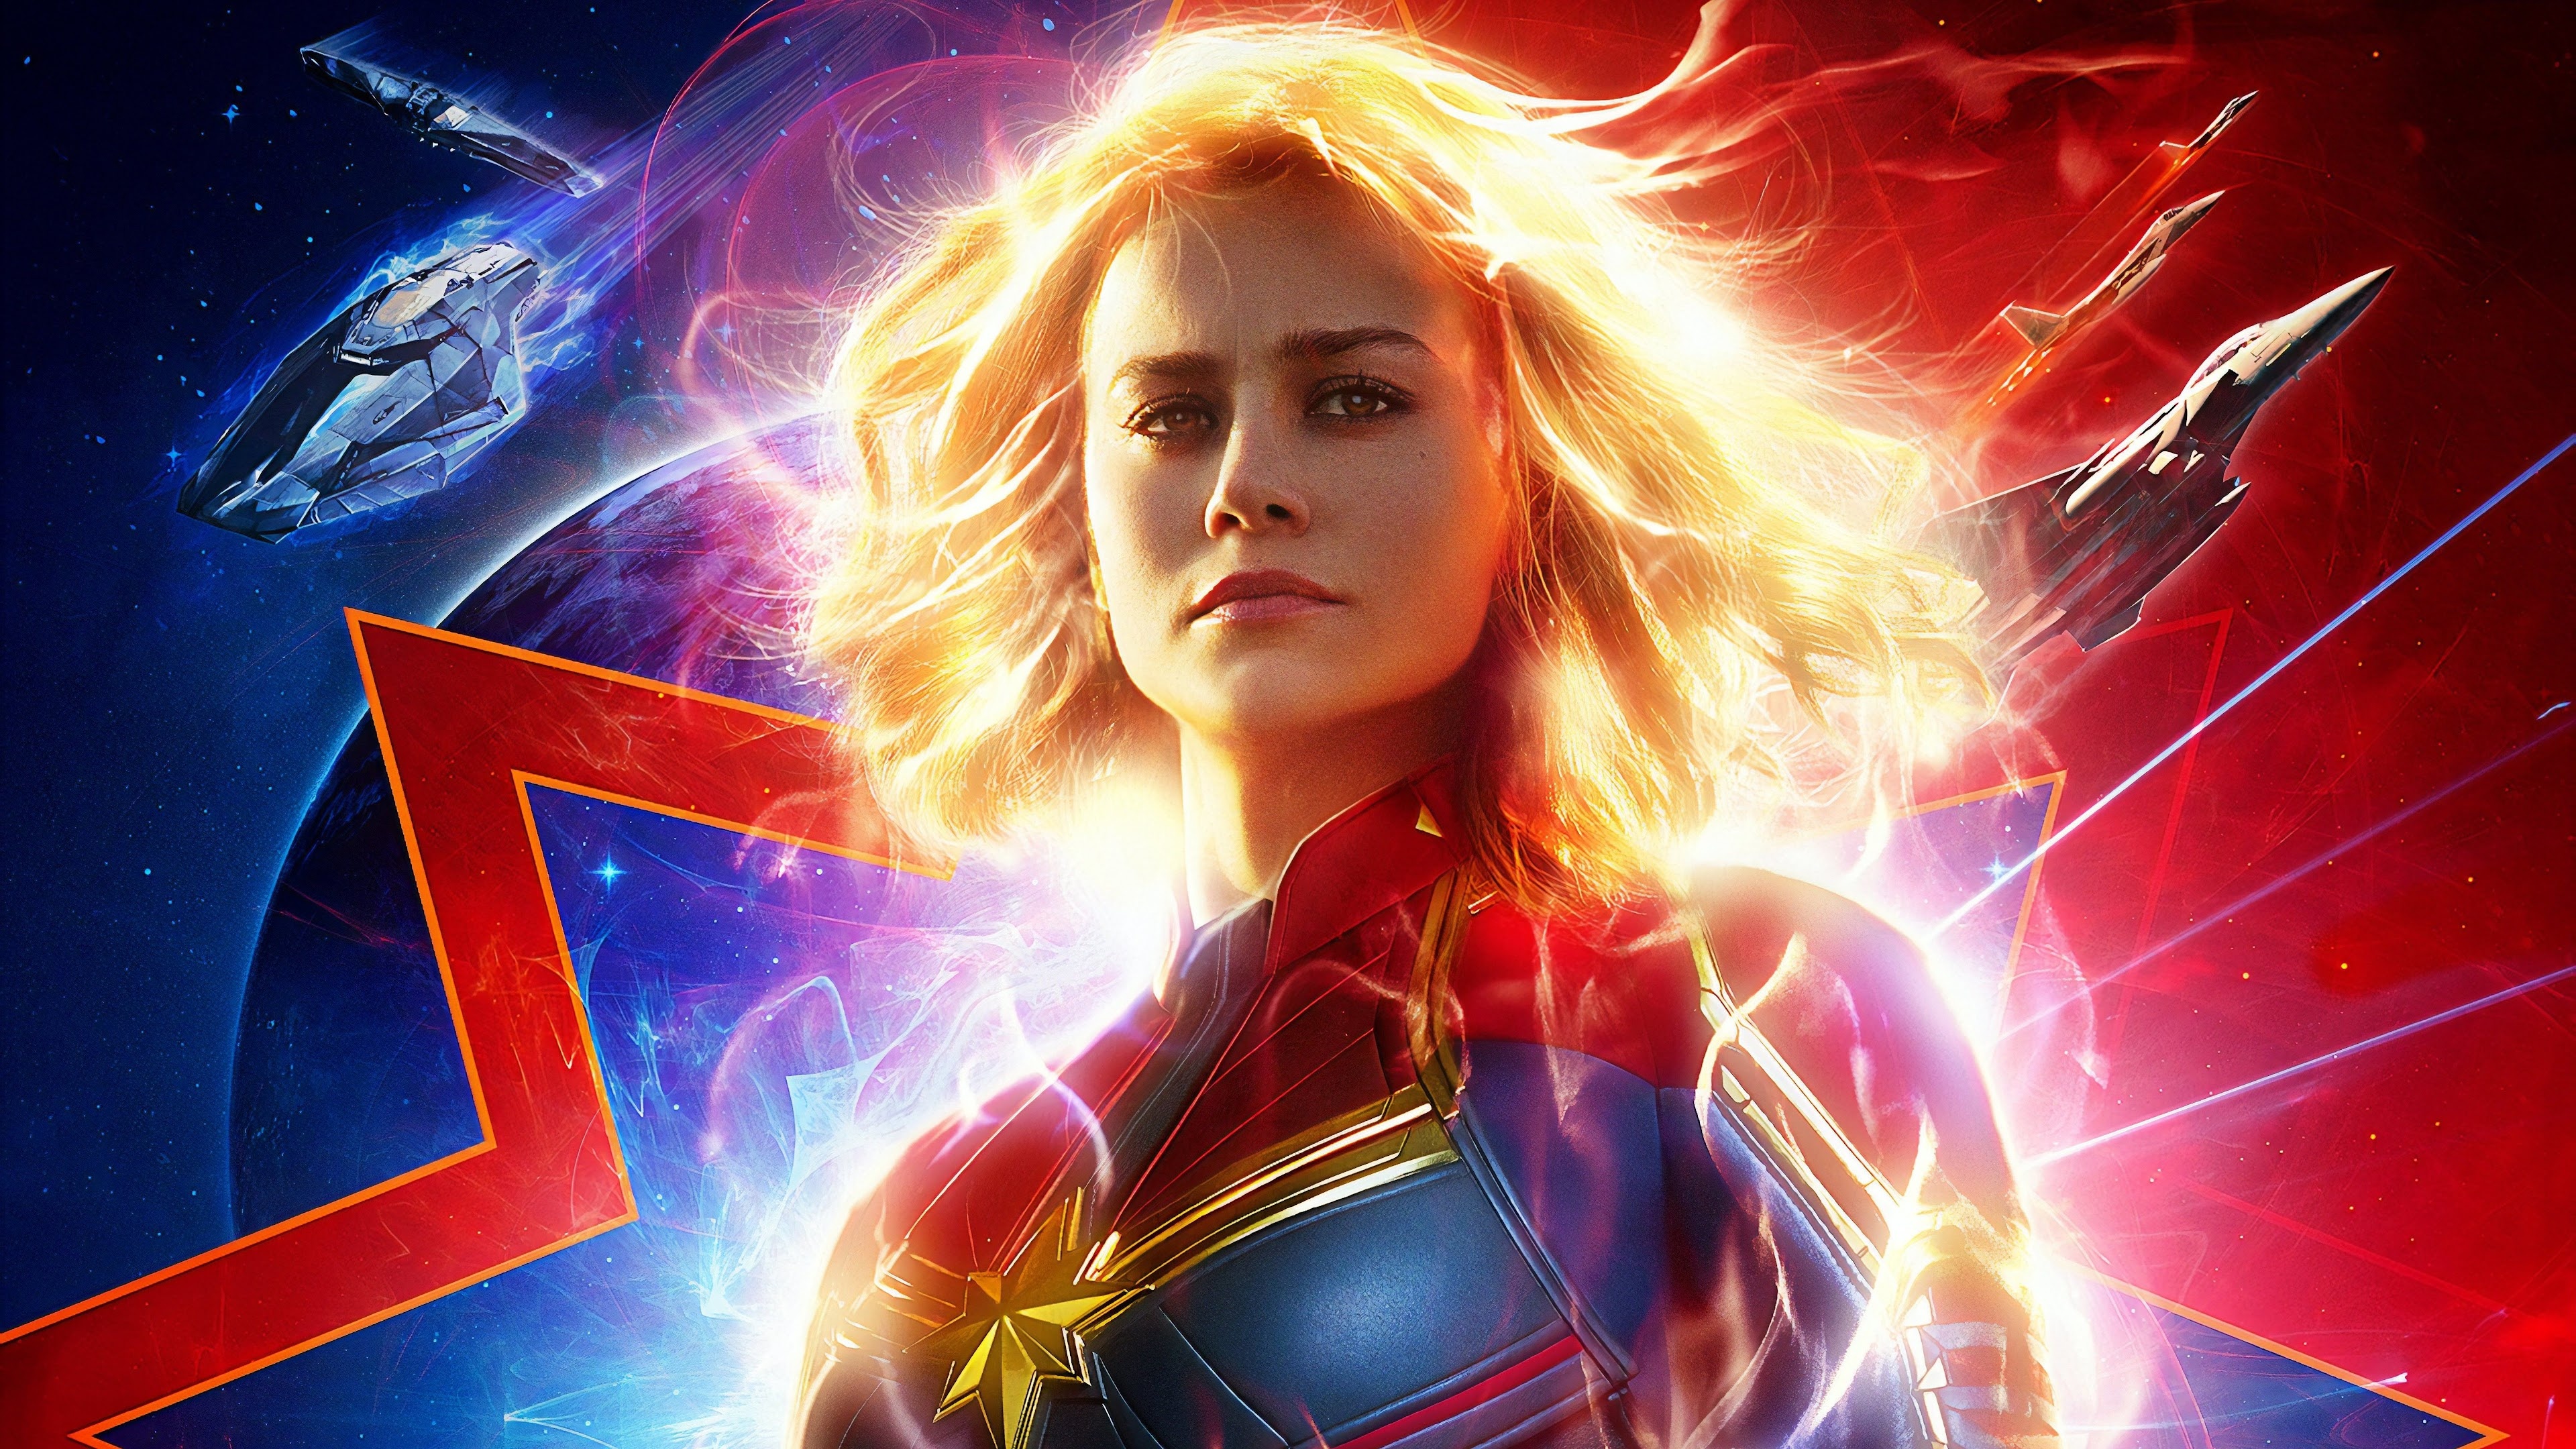 Captain Marvel film, Brie Larson as Carol Danvers, 4K desktop background, Marvel superhero, 3840x2160 4K Desktop